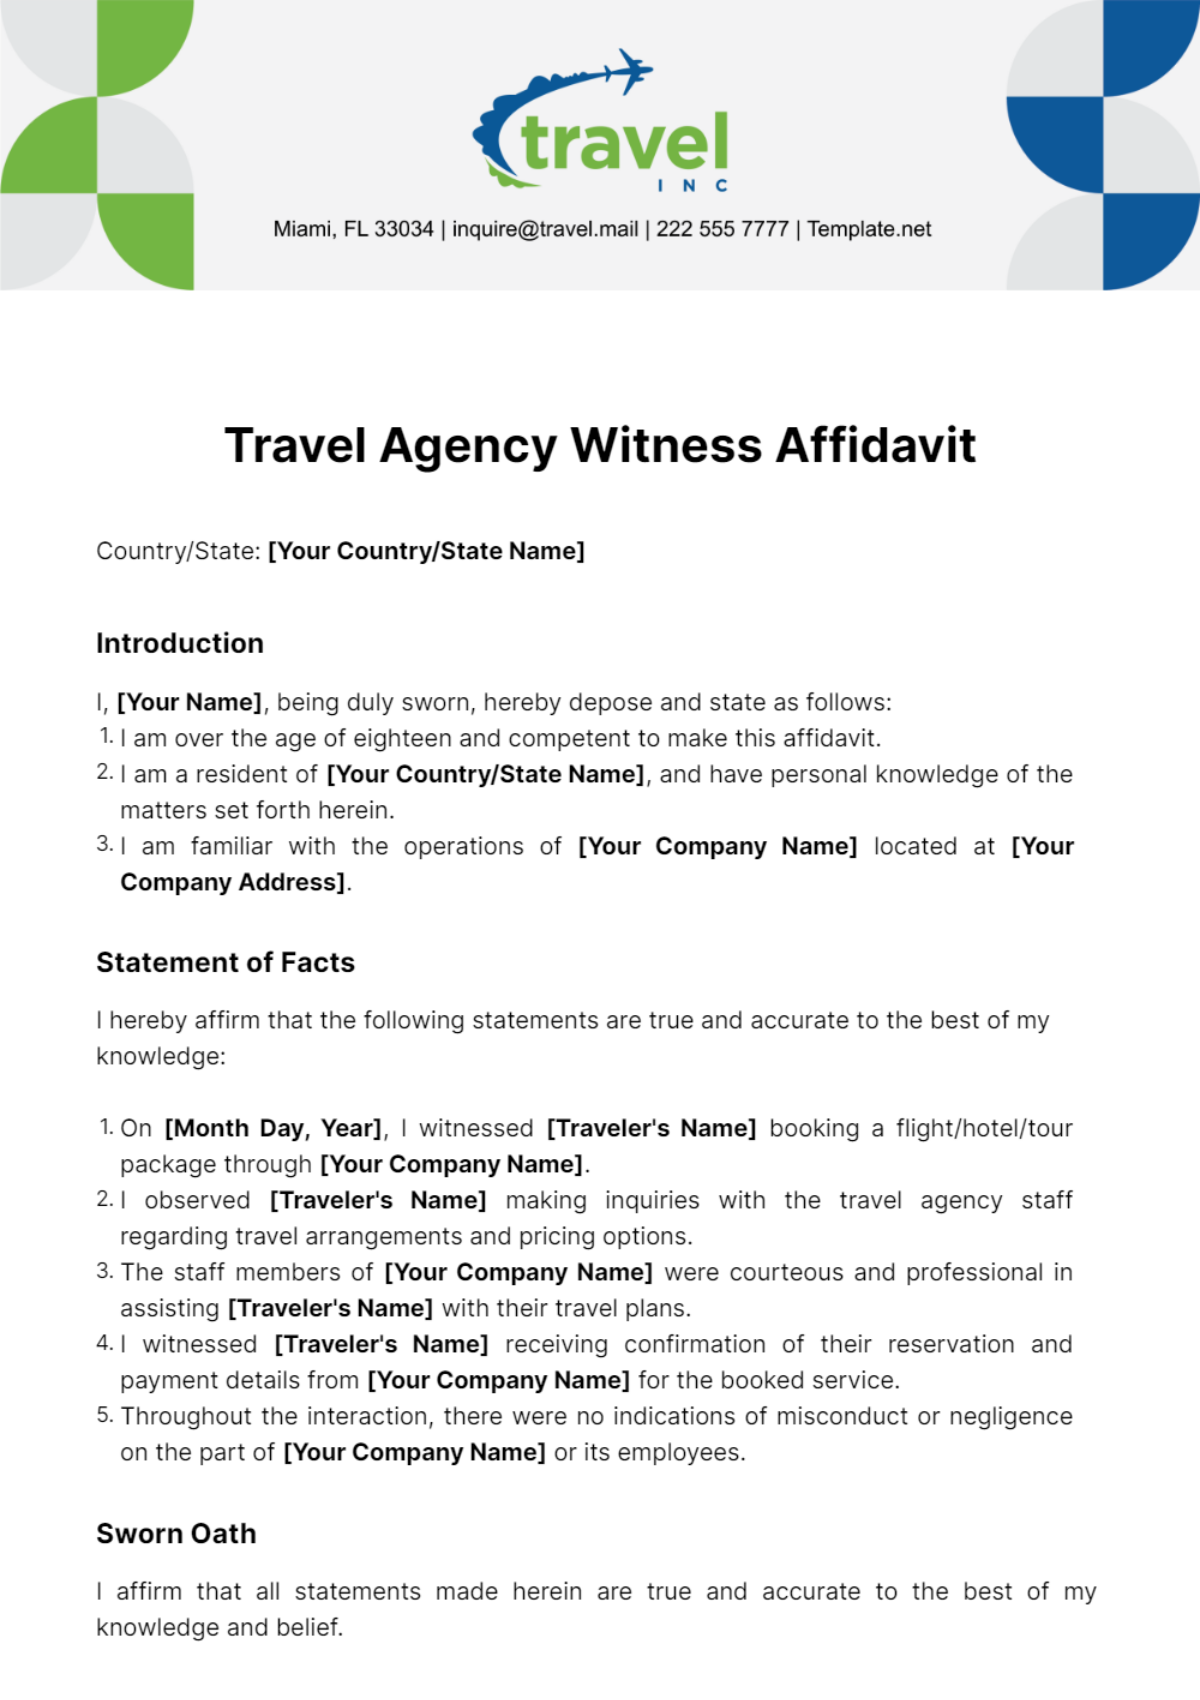 Travel Agency Witness Affidavit Template